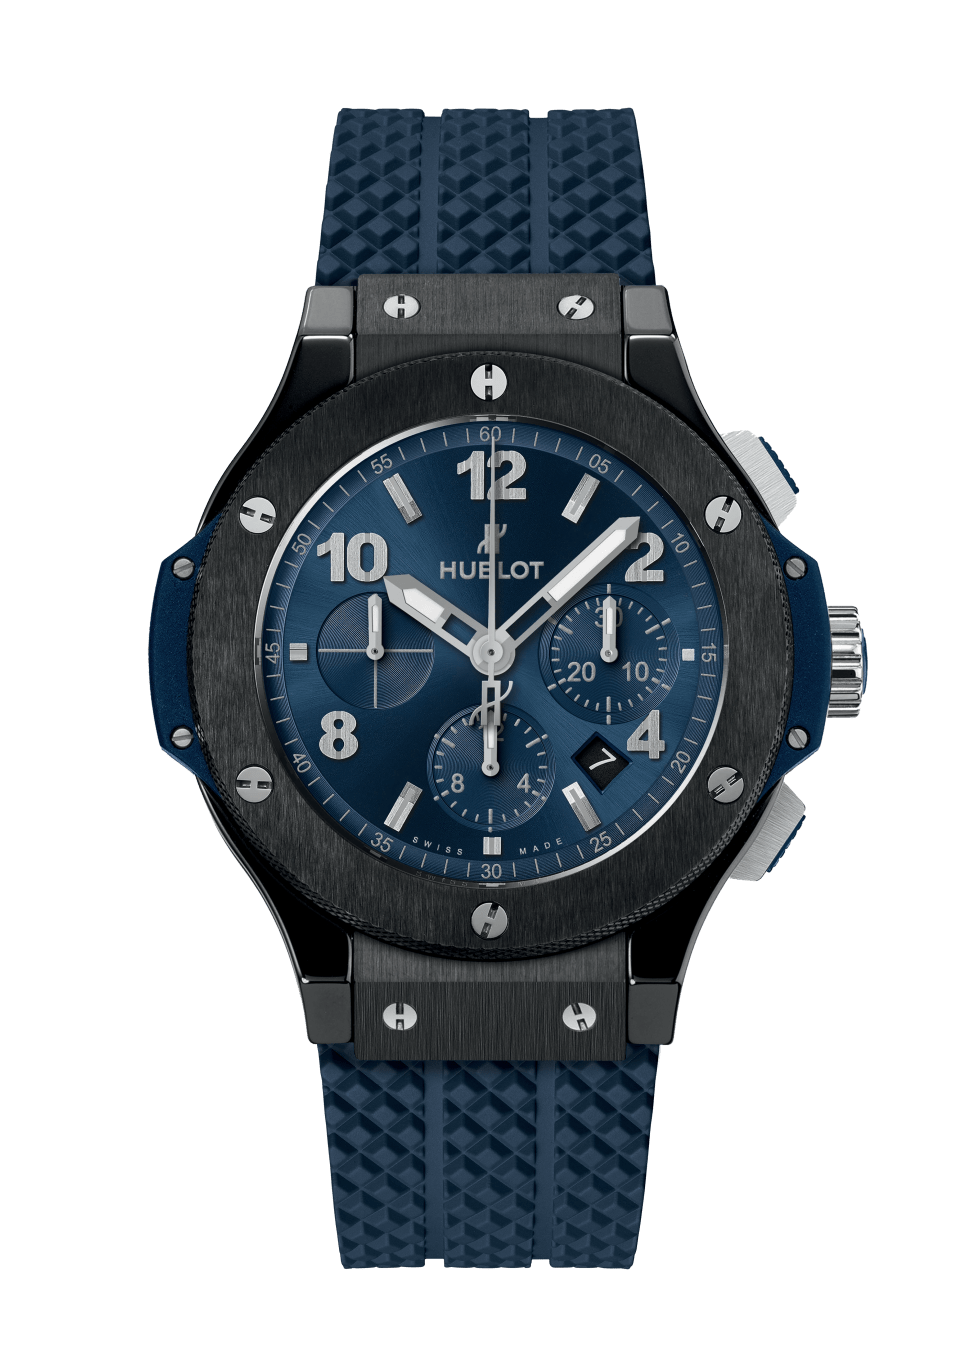 Men's watch / unisex  HUBLOT, Big Bang Original Ceramic Blue / 44mm, SKU: 301.CM.710.RX | watchphilosophy.co.uk